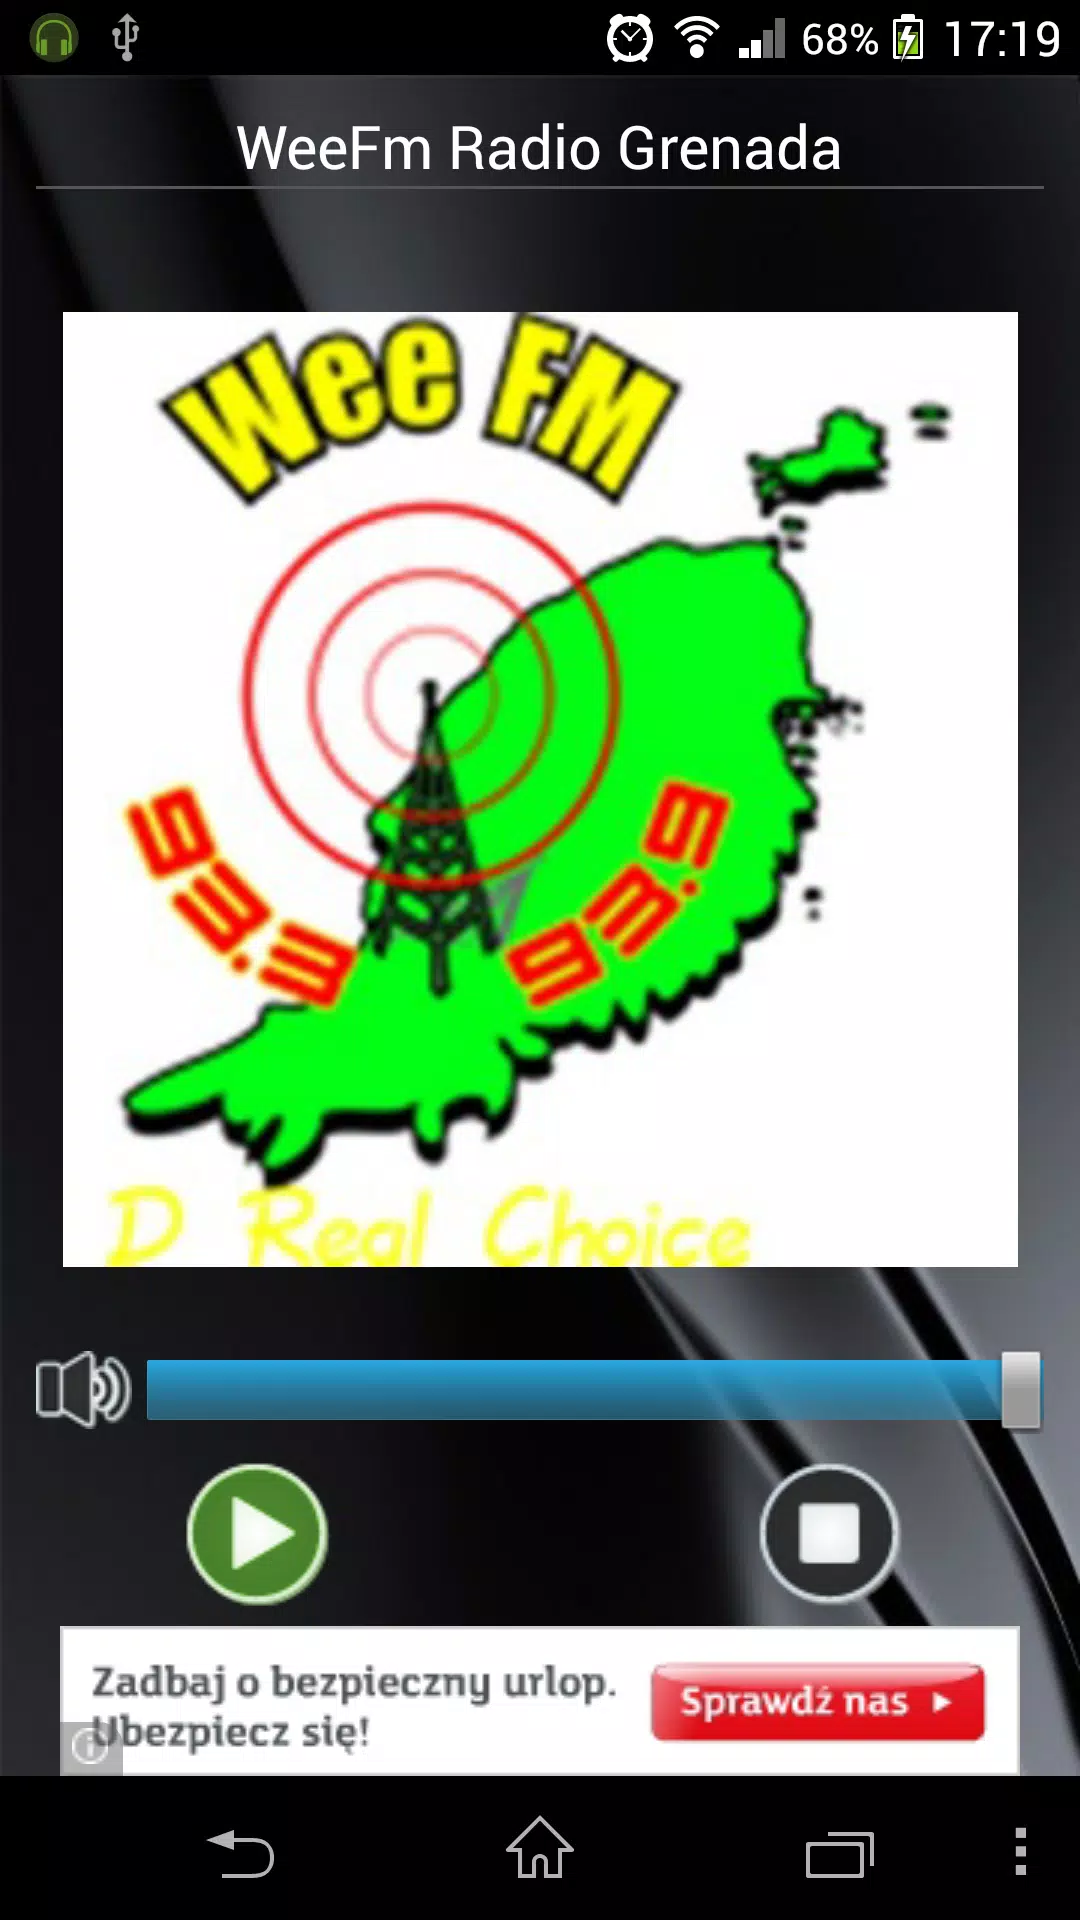 WeeFm Radio Grenada for Android - APK Download